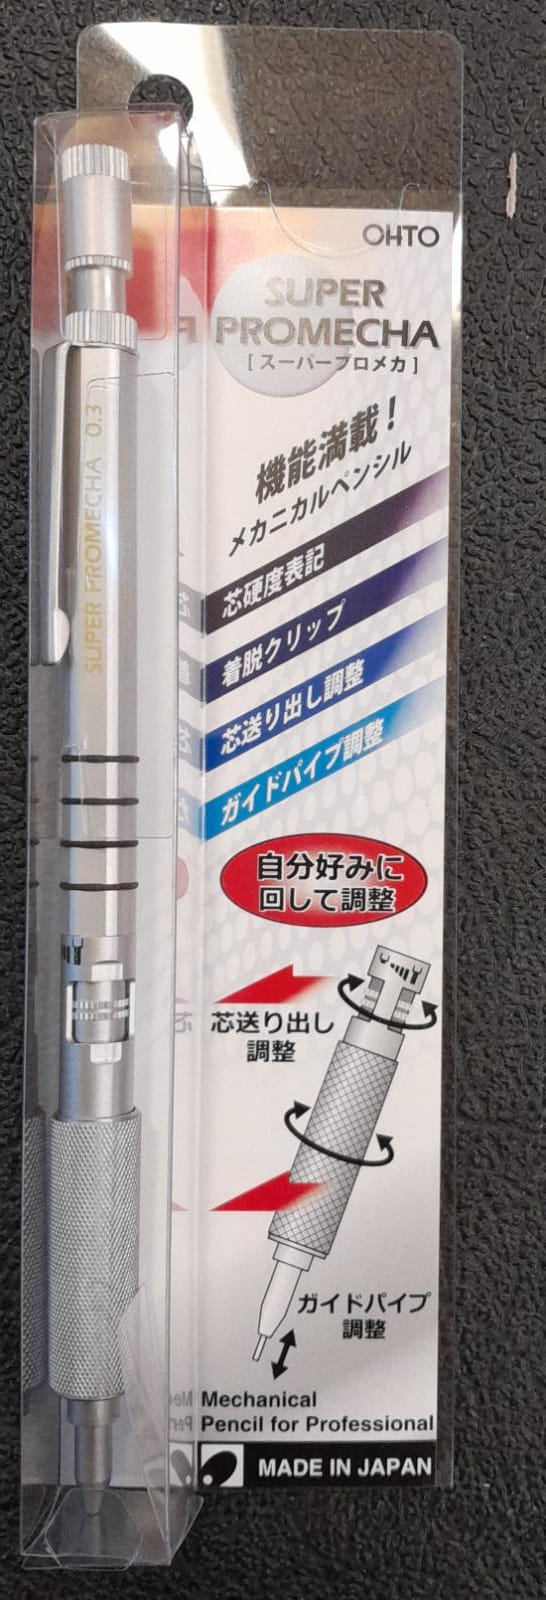 Ohto Super Promecha 1500P Drafting Pencil 0.3 mm